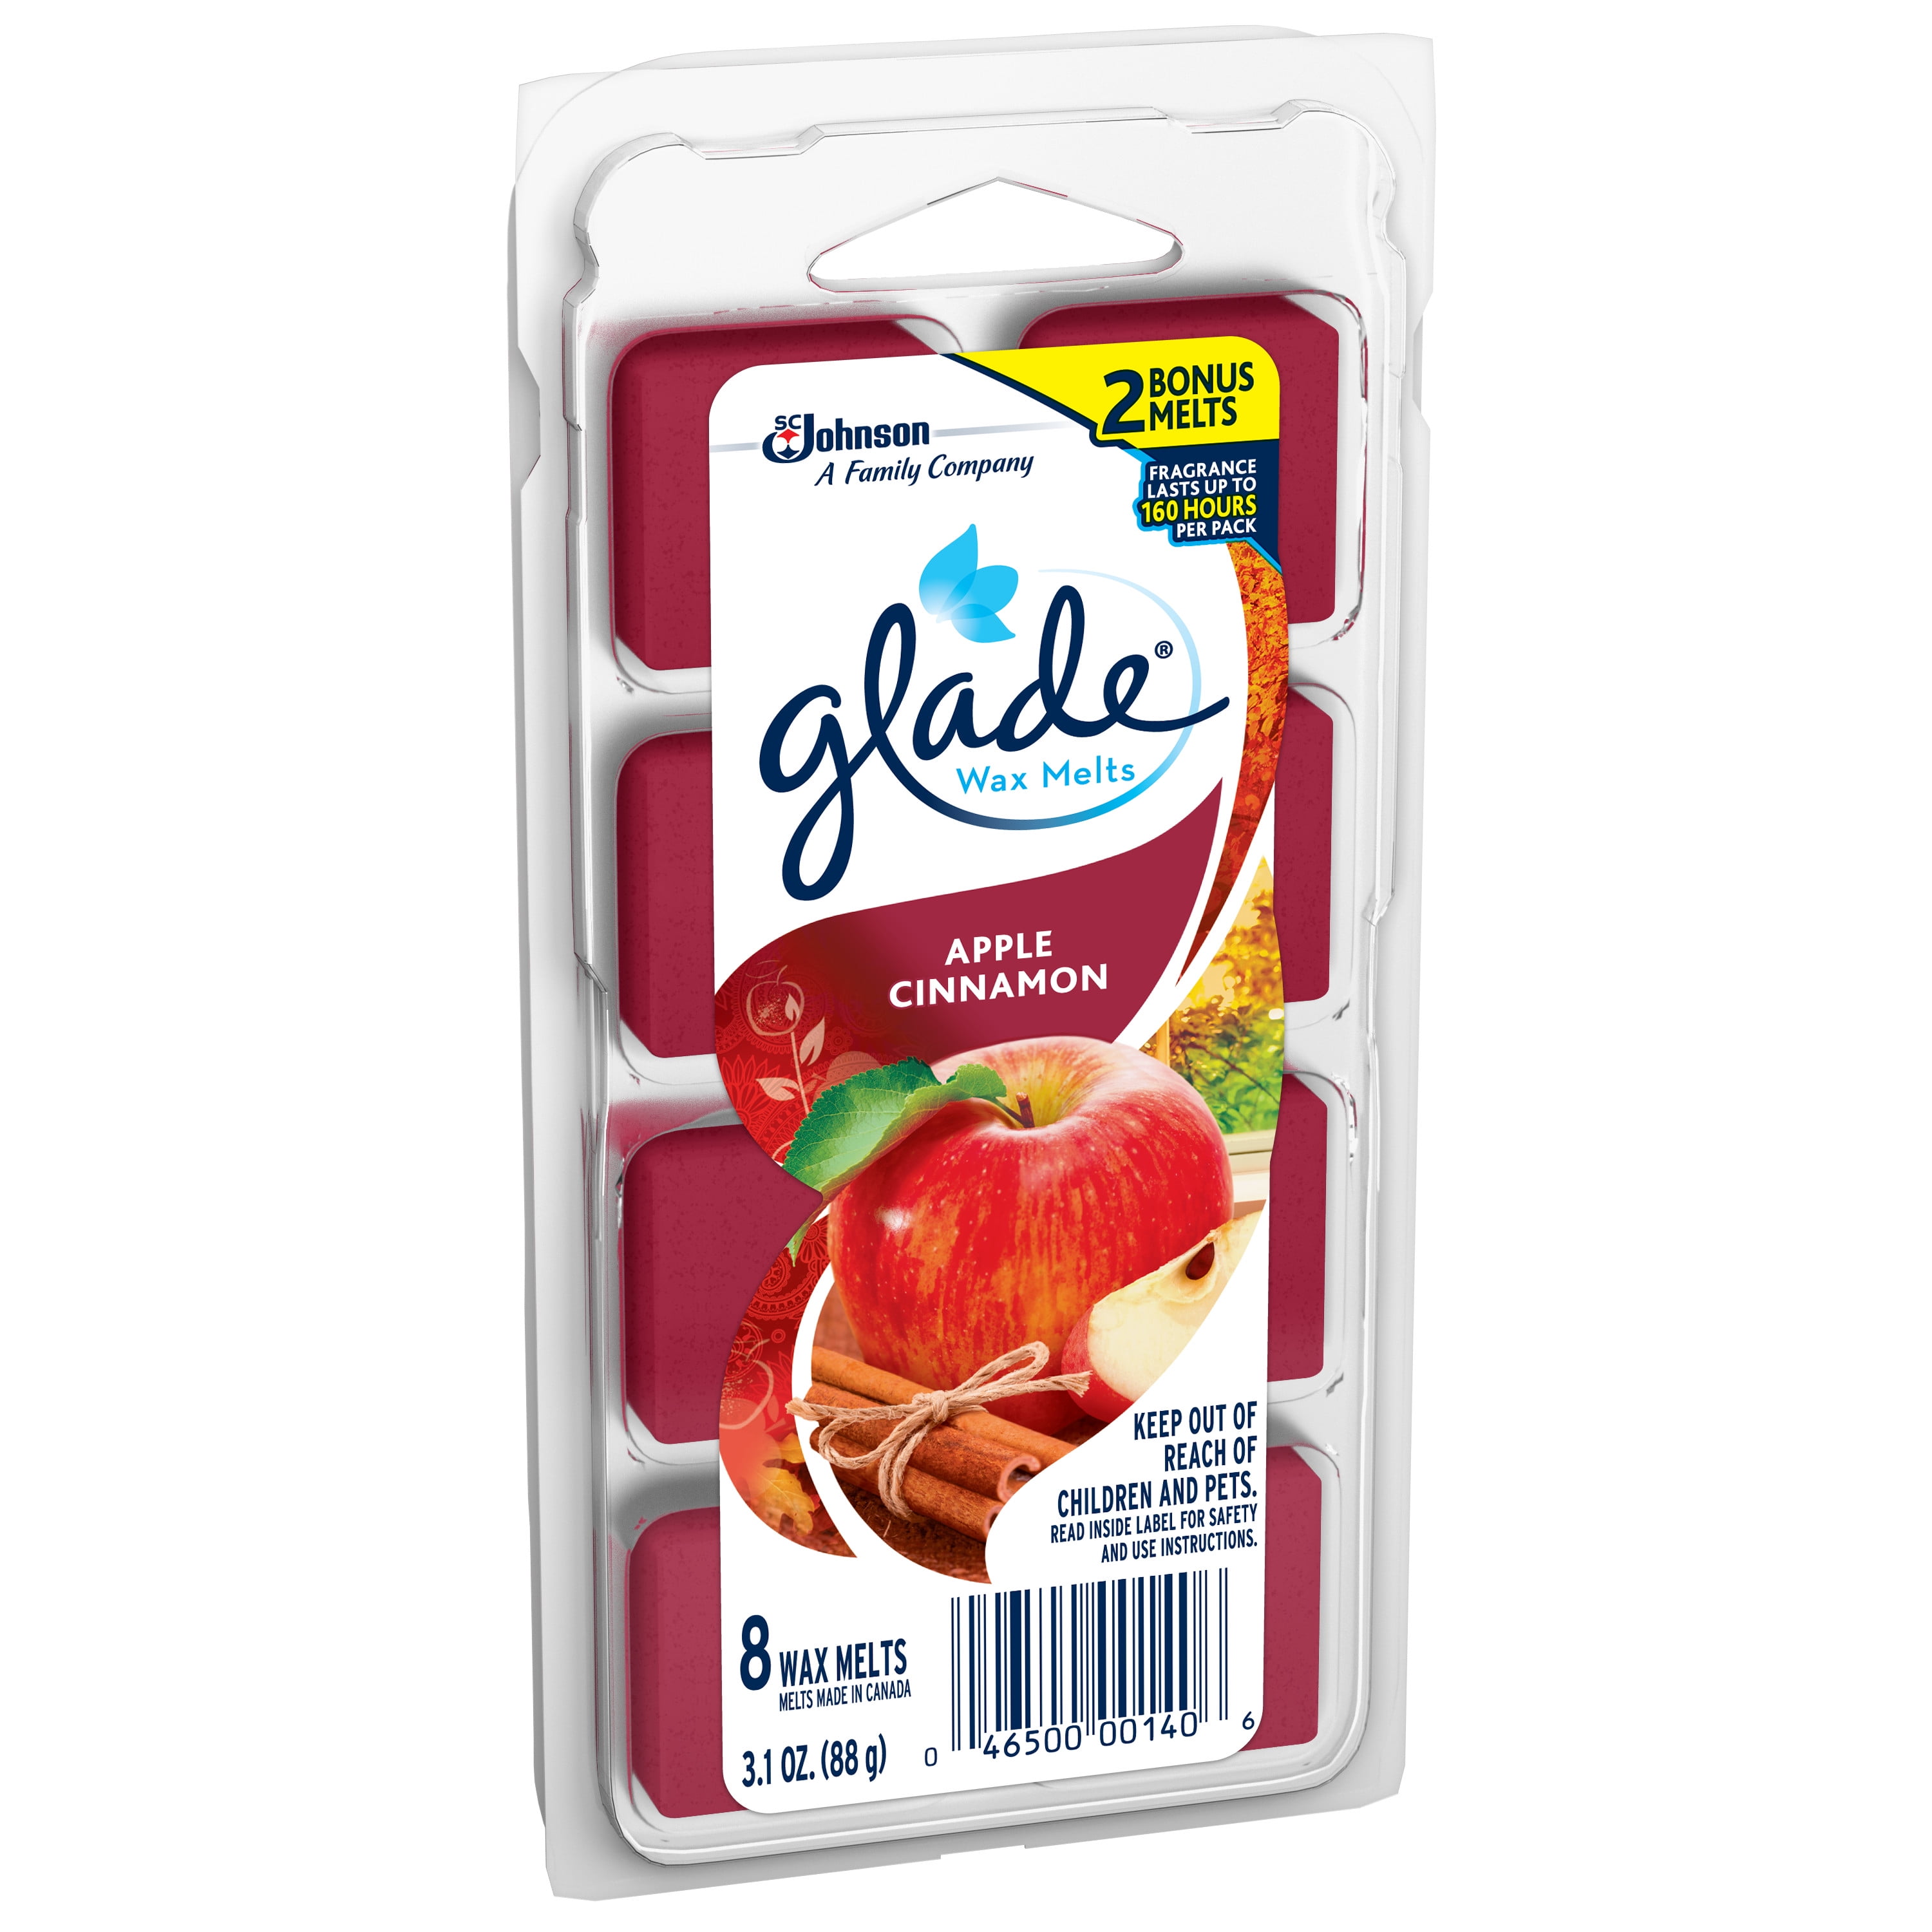 Glade Wax Melts Air Freshener Refill, Apple Cinnamon, 3.1 oz, 8 refills